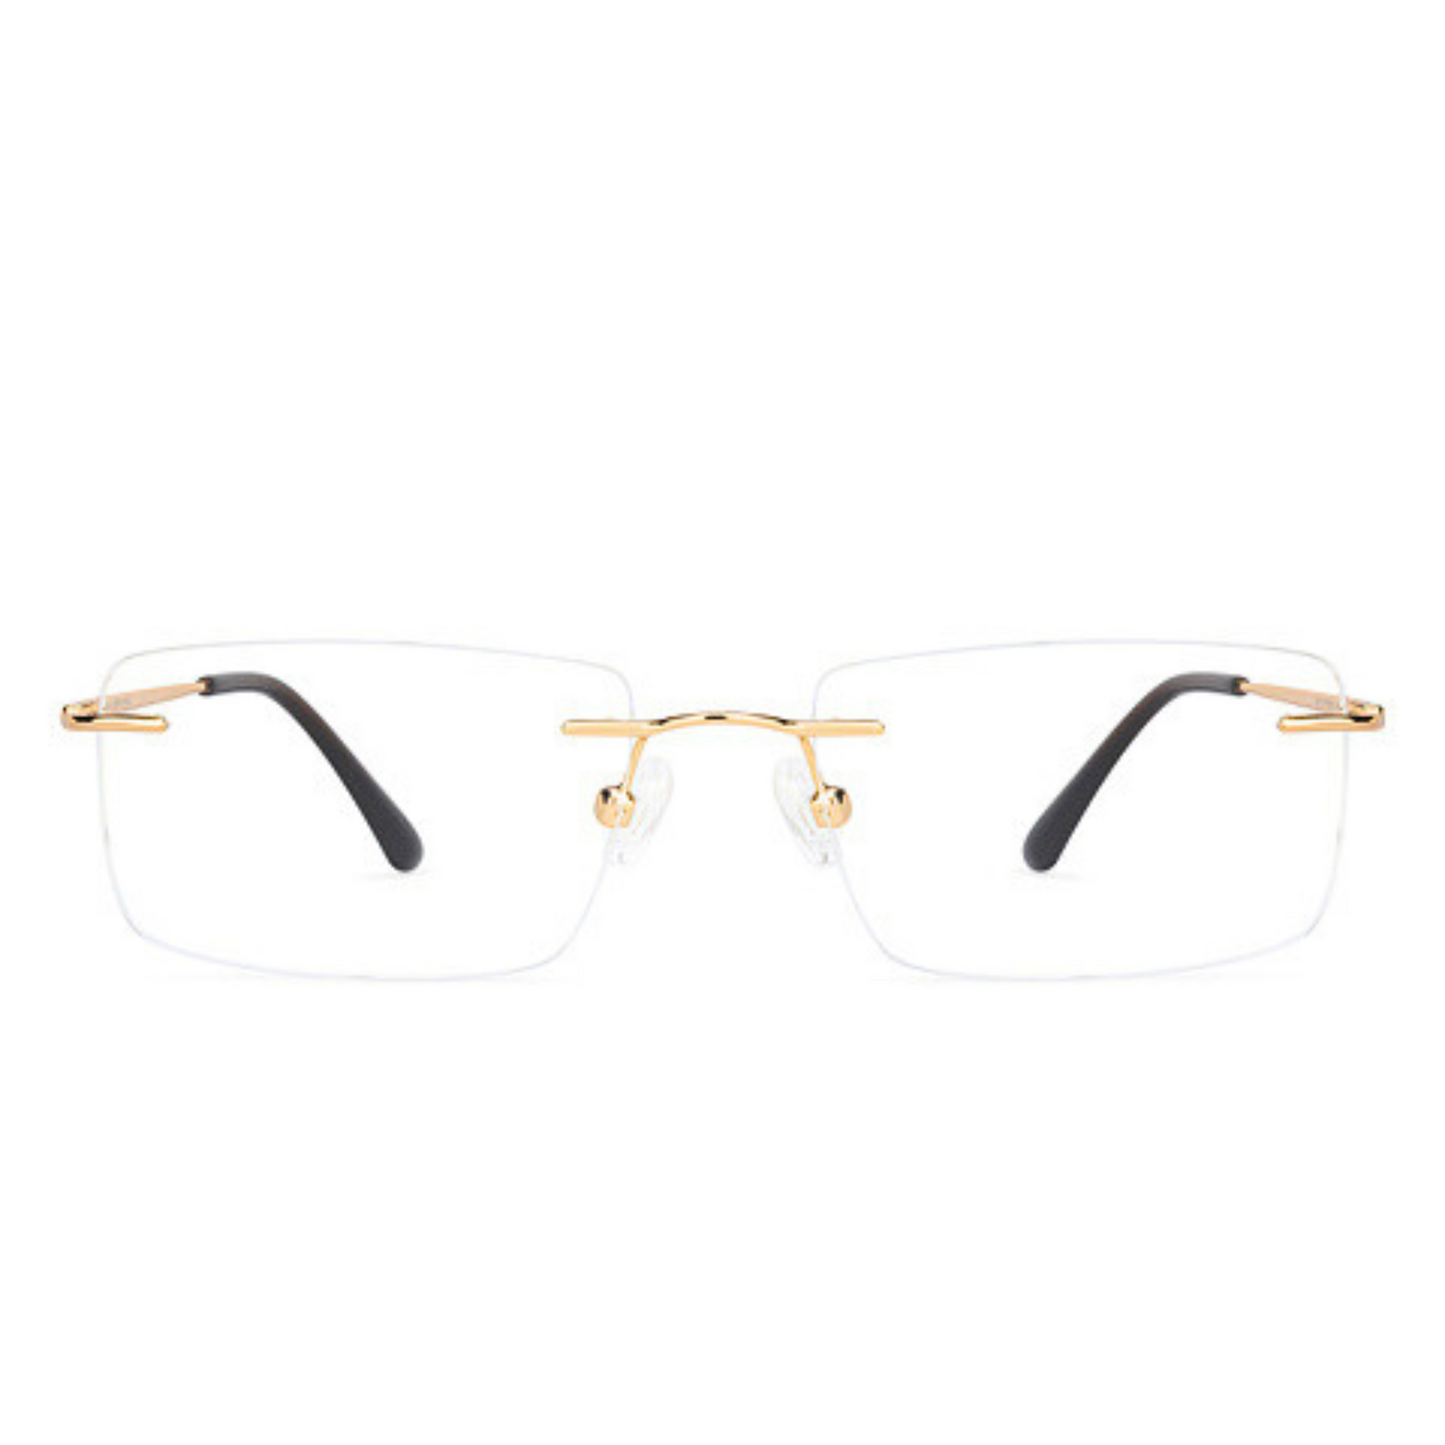 Titanium Golden Rimless Eyeglasses Frame (Single Vision)